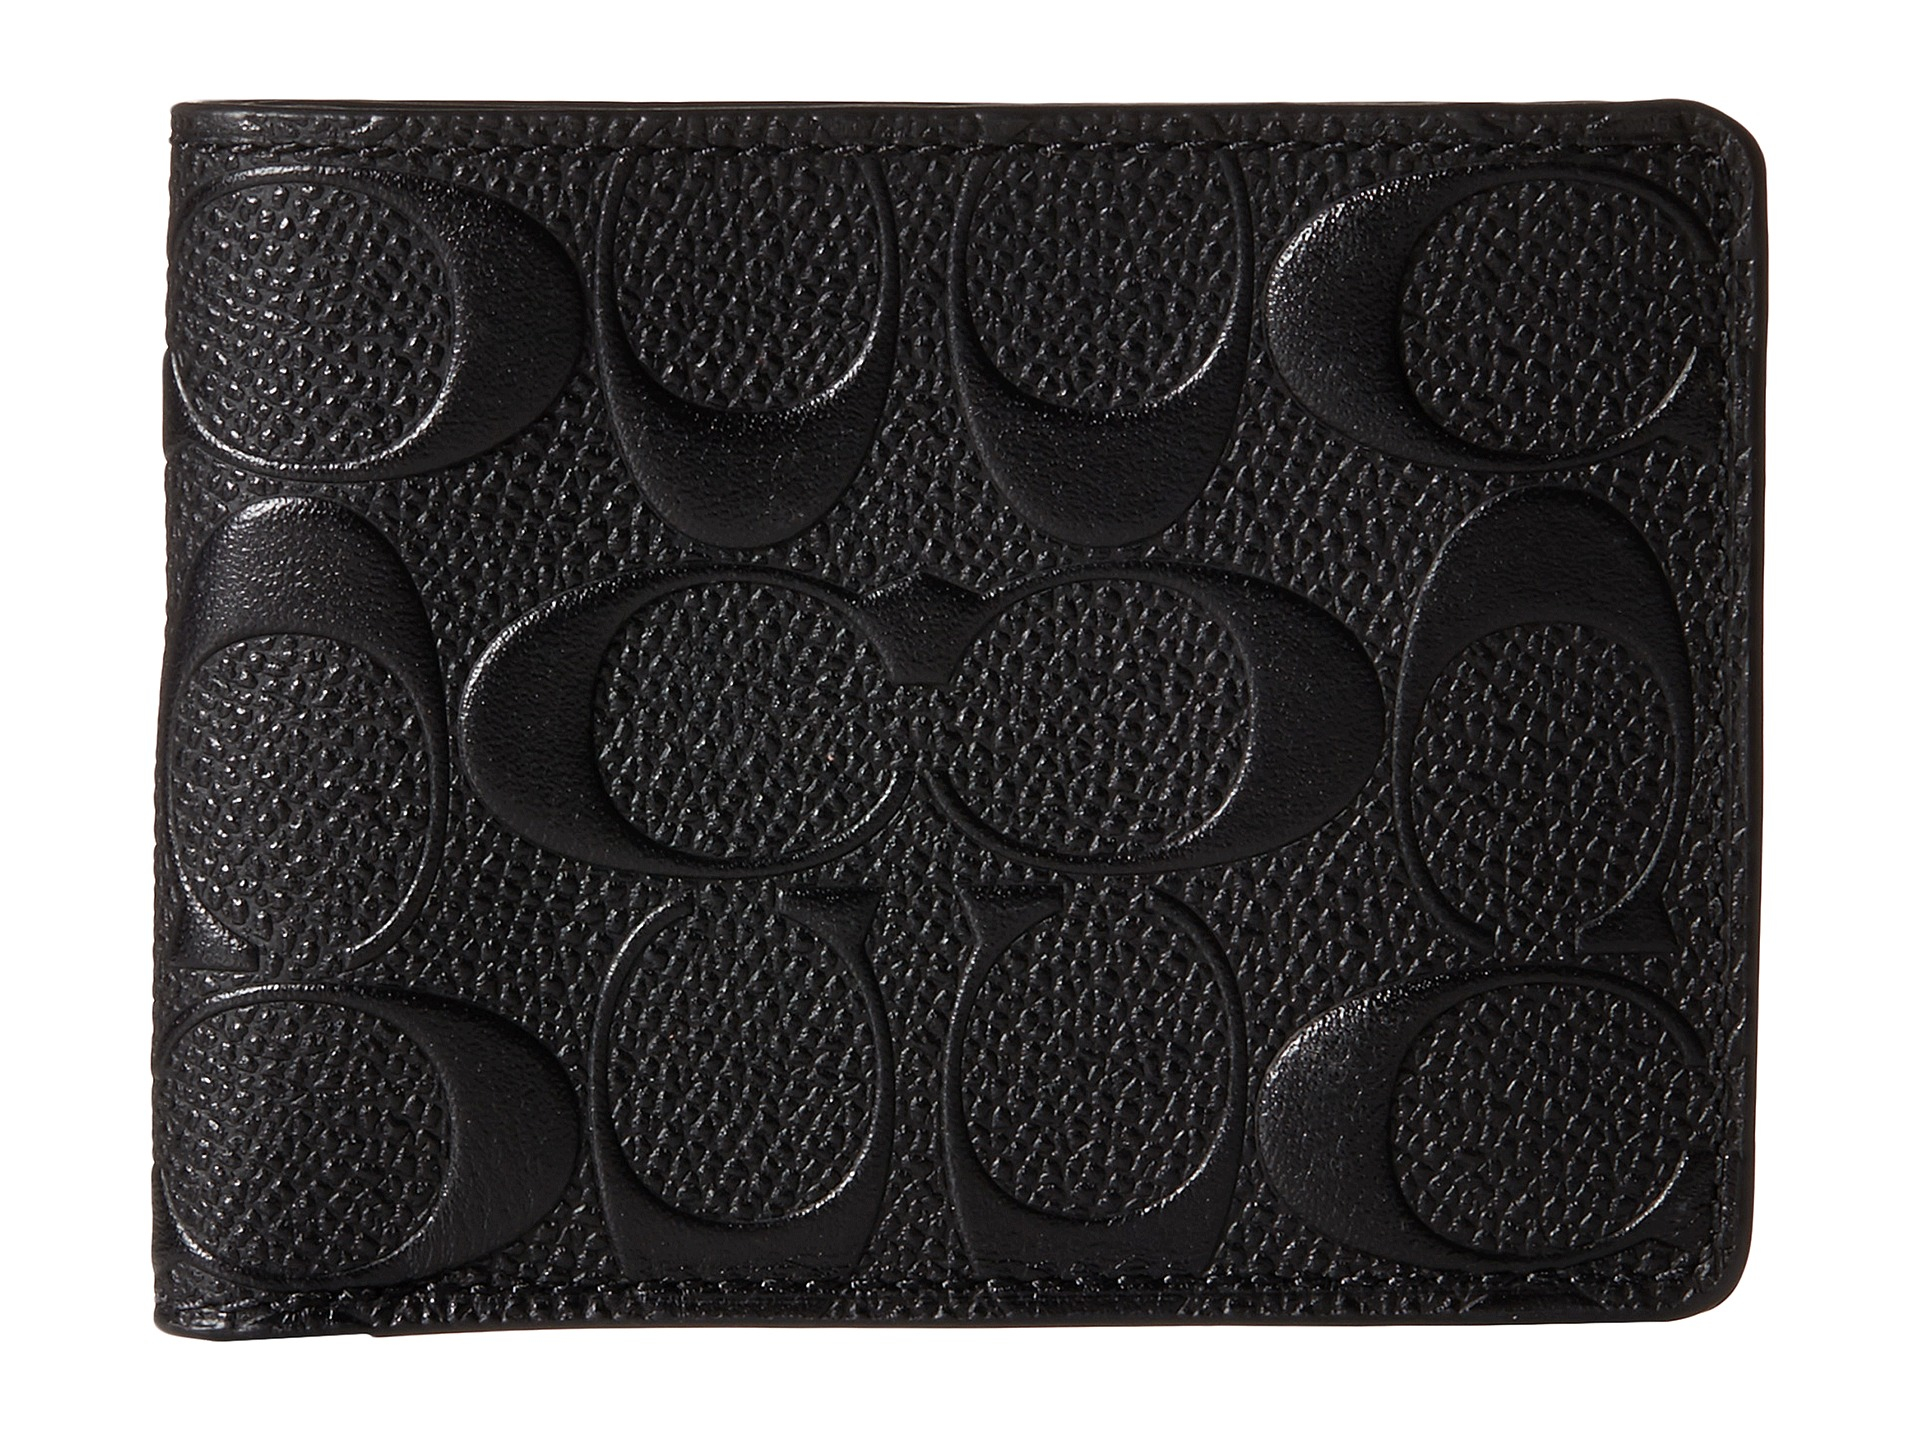 Lyst - Coach Double Billfold Wallet In Signature Crossgrain Leather in Black for Men